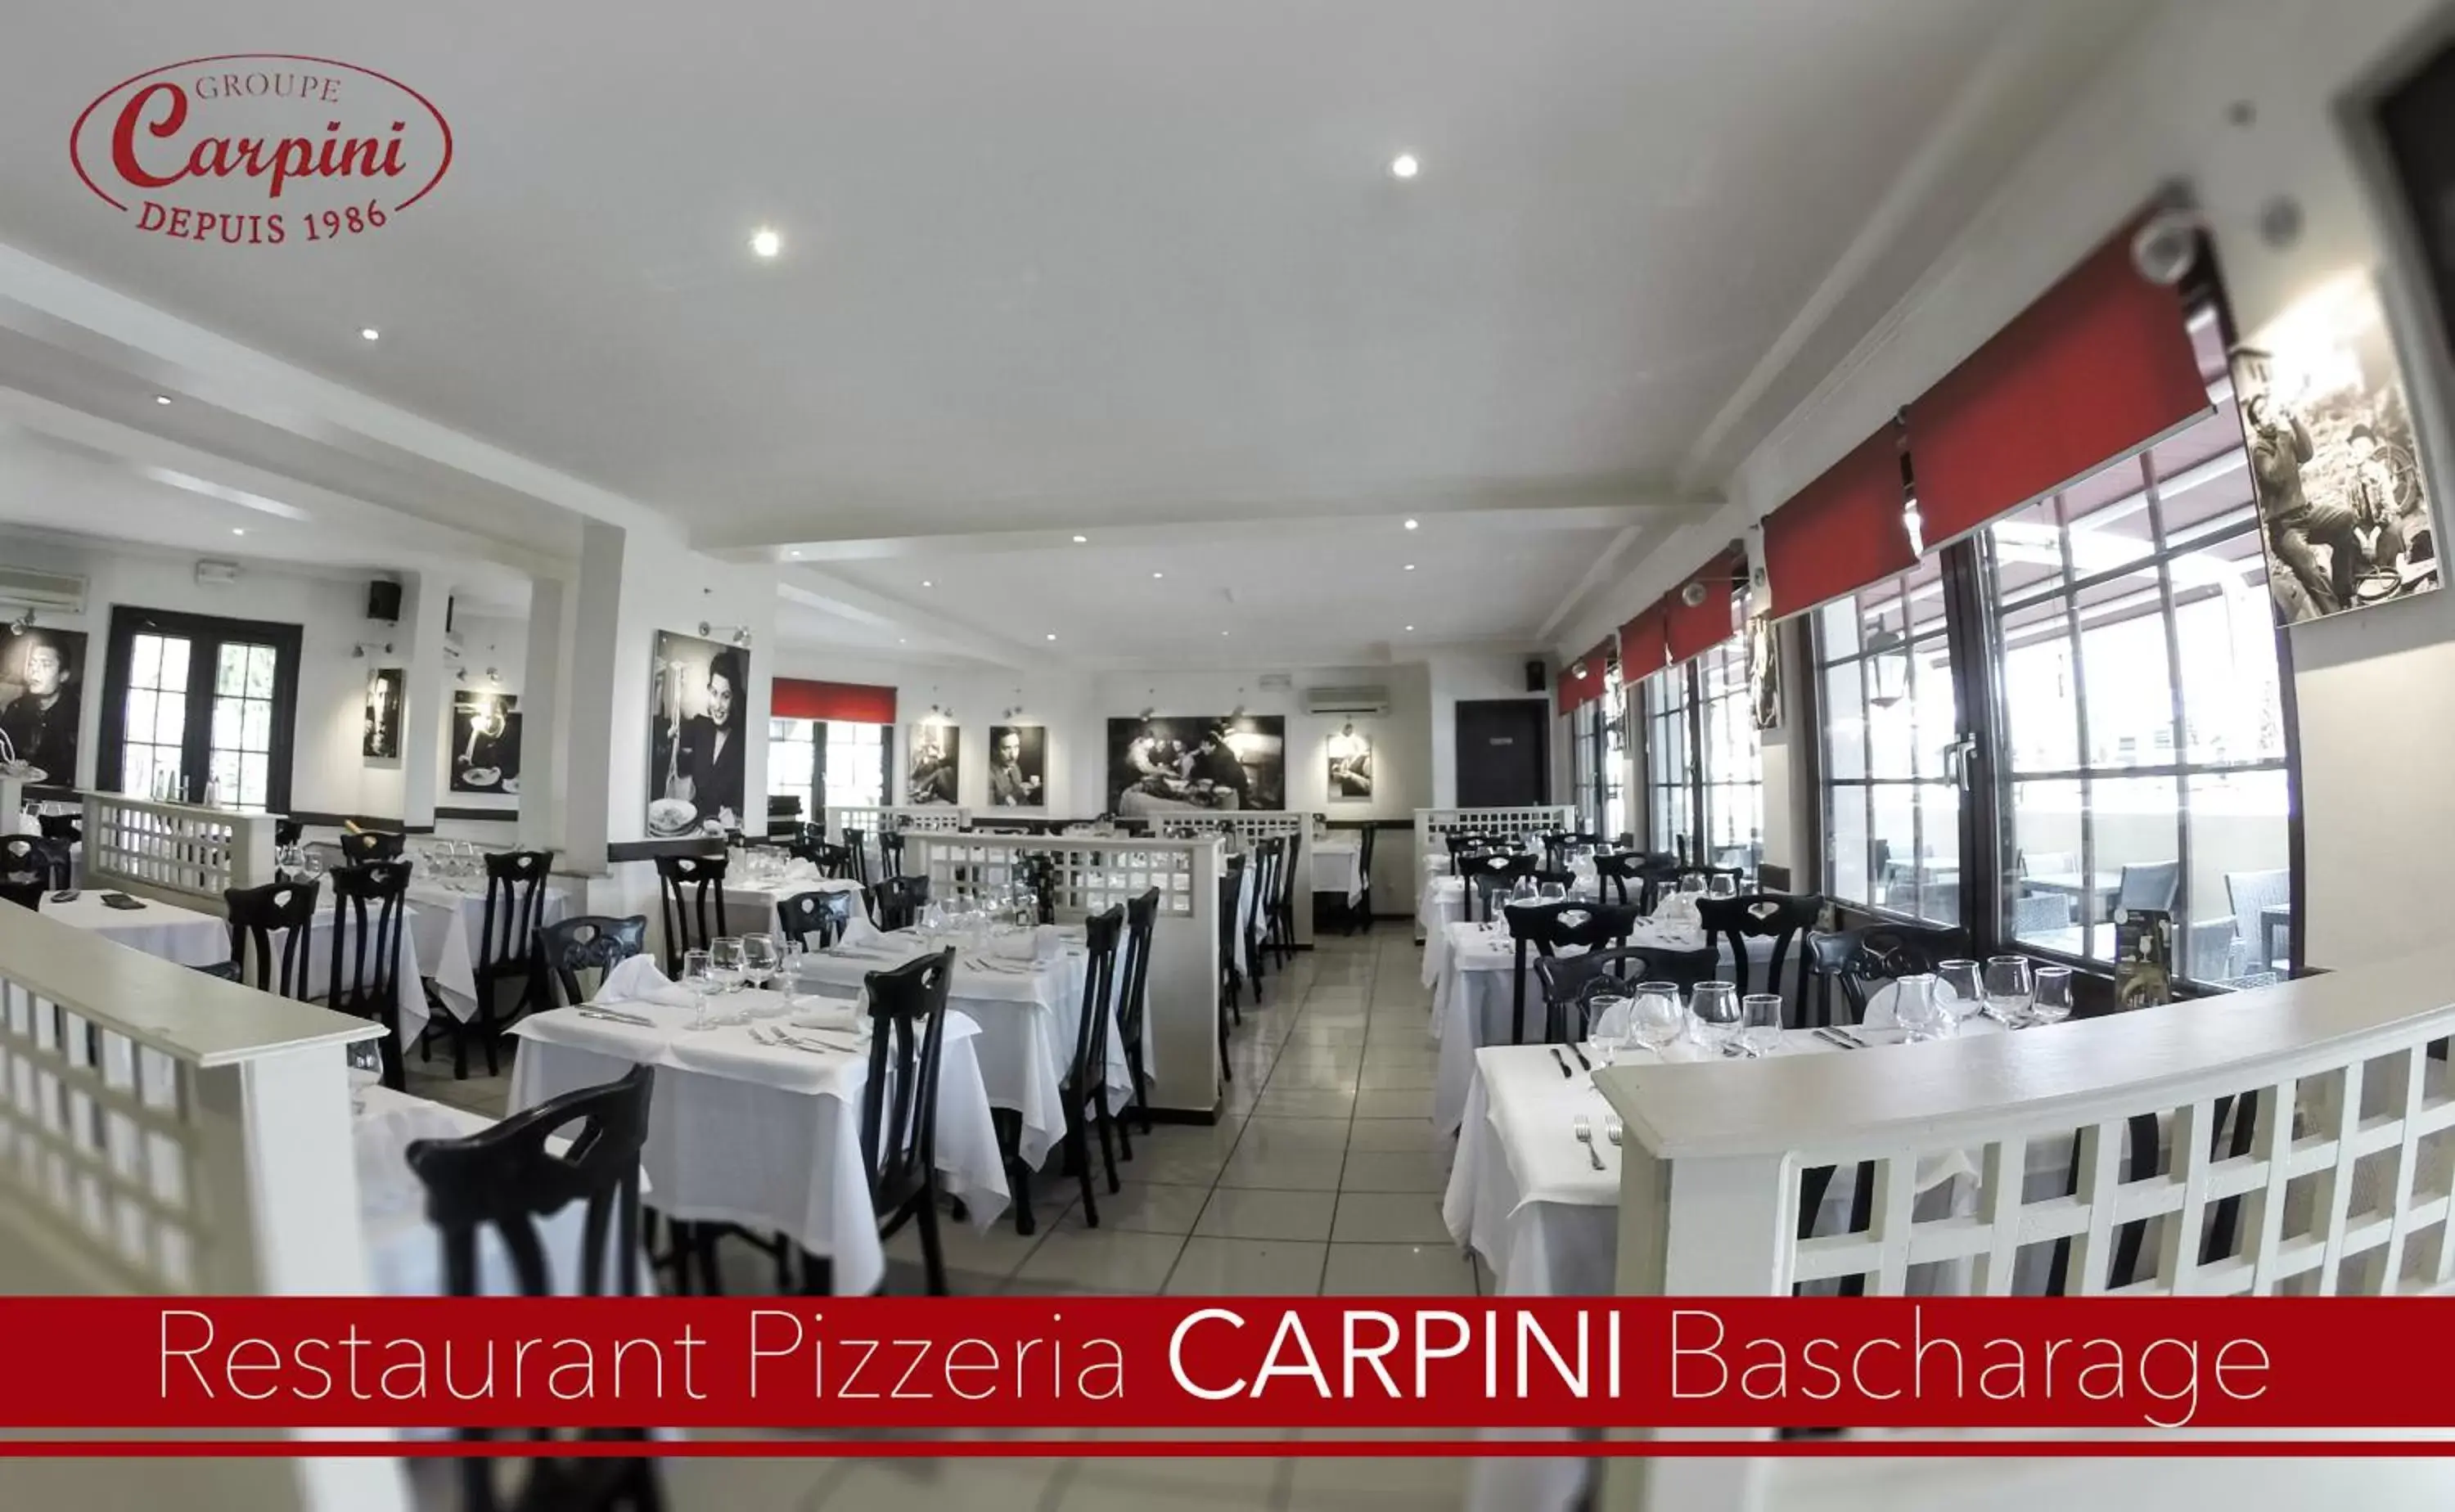 Restaurant/Places to Eat in Hotel Carpini